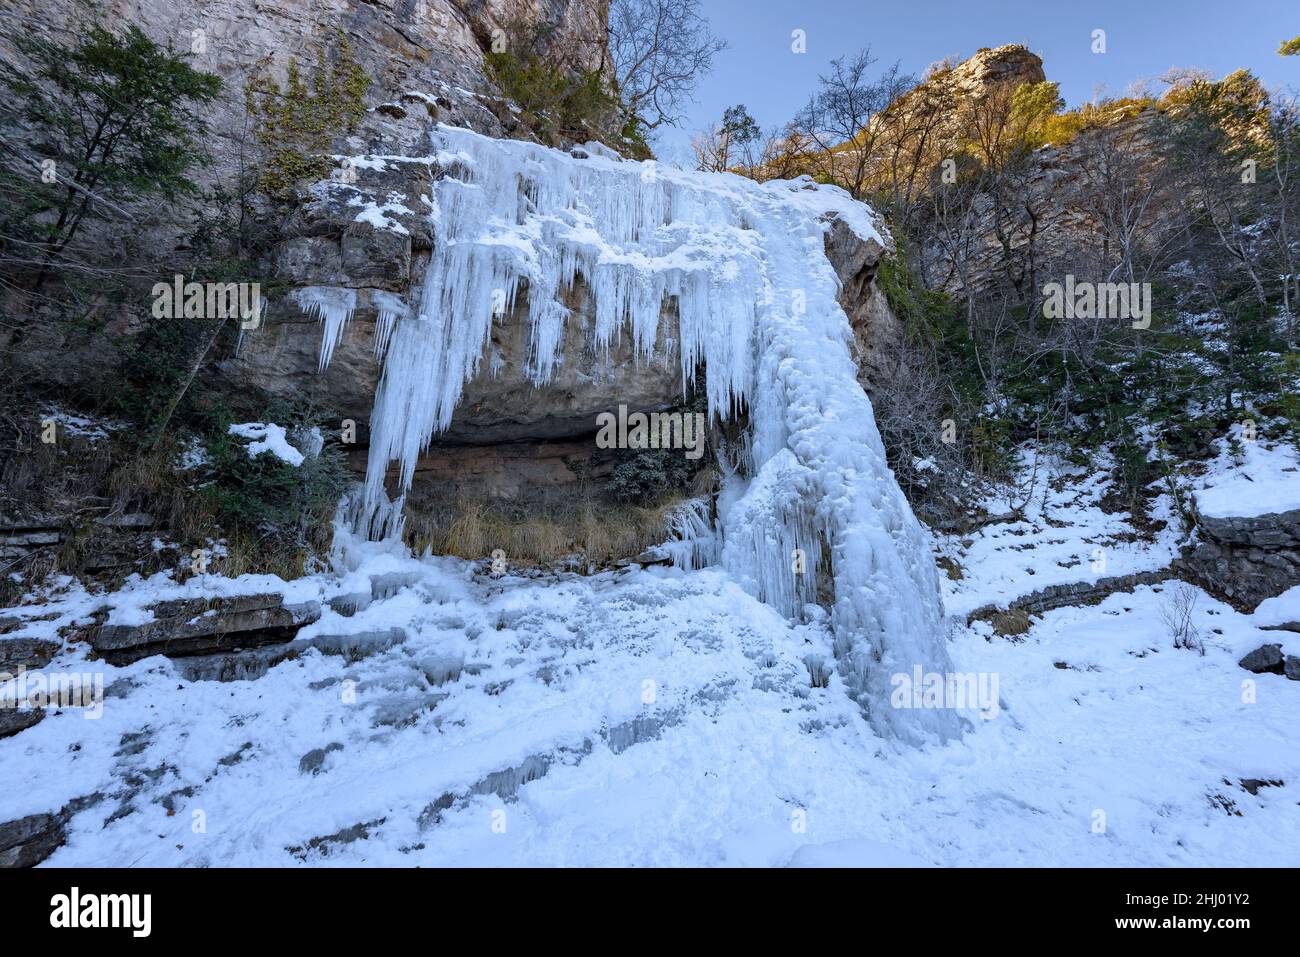 Salt de Murcurols waterfall frozen and snowy in winter (Berguedà, Catalonia, Spain, Pyrenees) ESP: Cascada del Salt de Murcurols helada y nevada Stock Photo